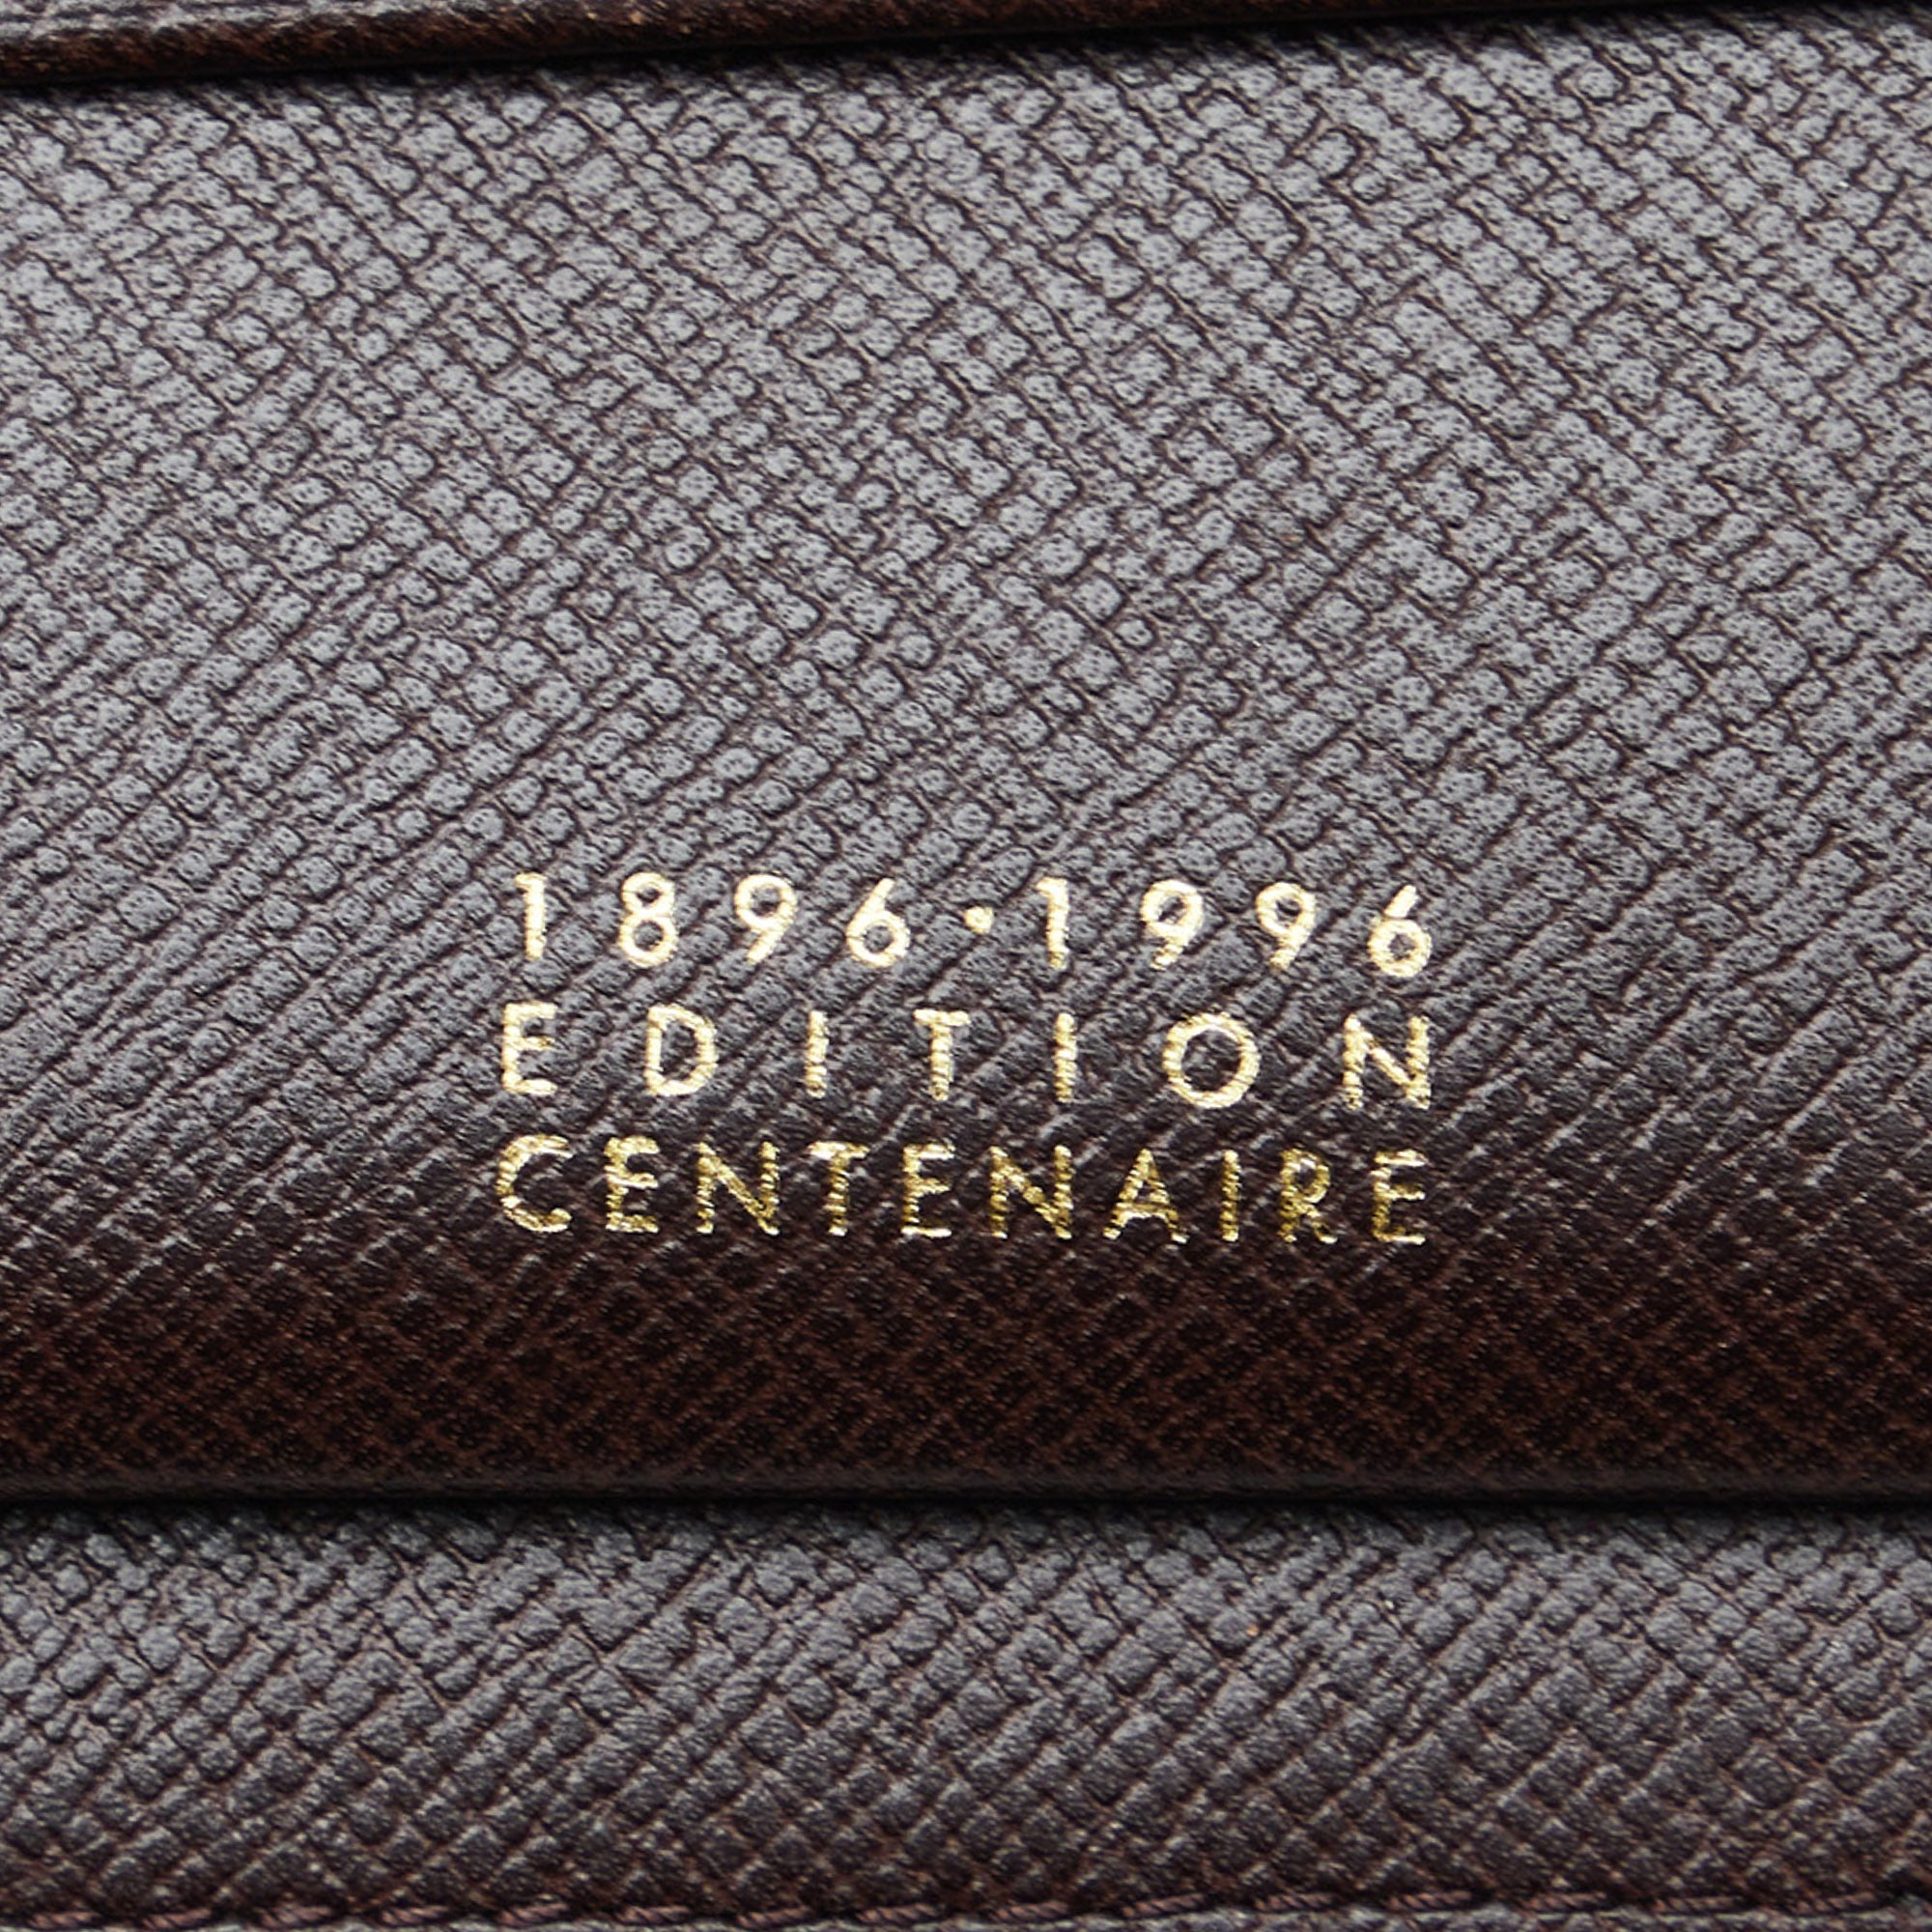 Louis Vuitton Centenaire Edition Marco Wallet